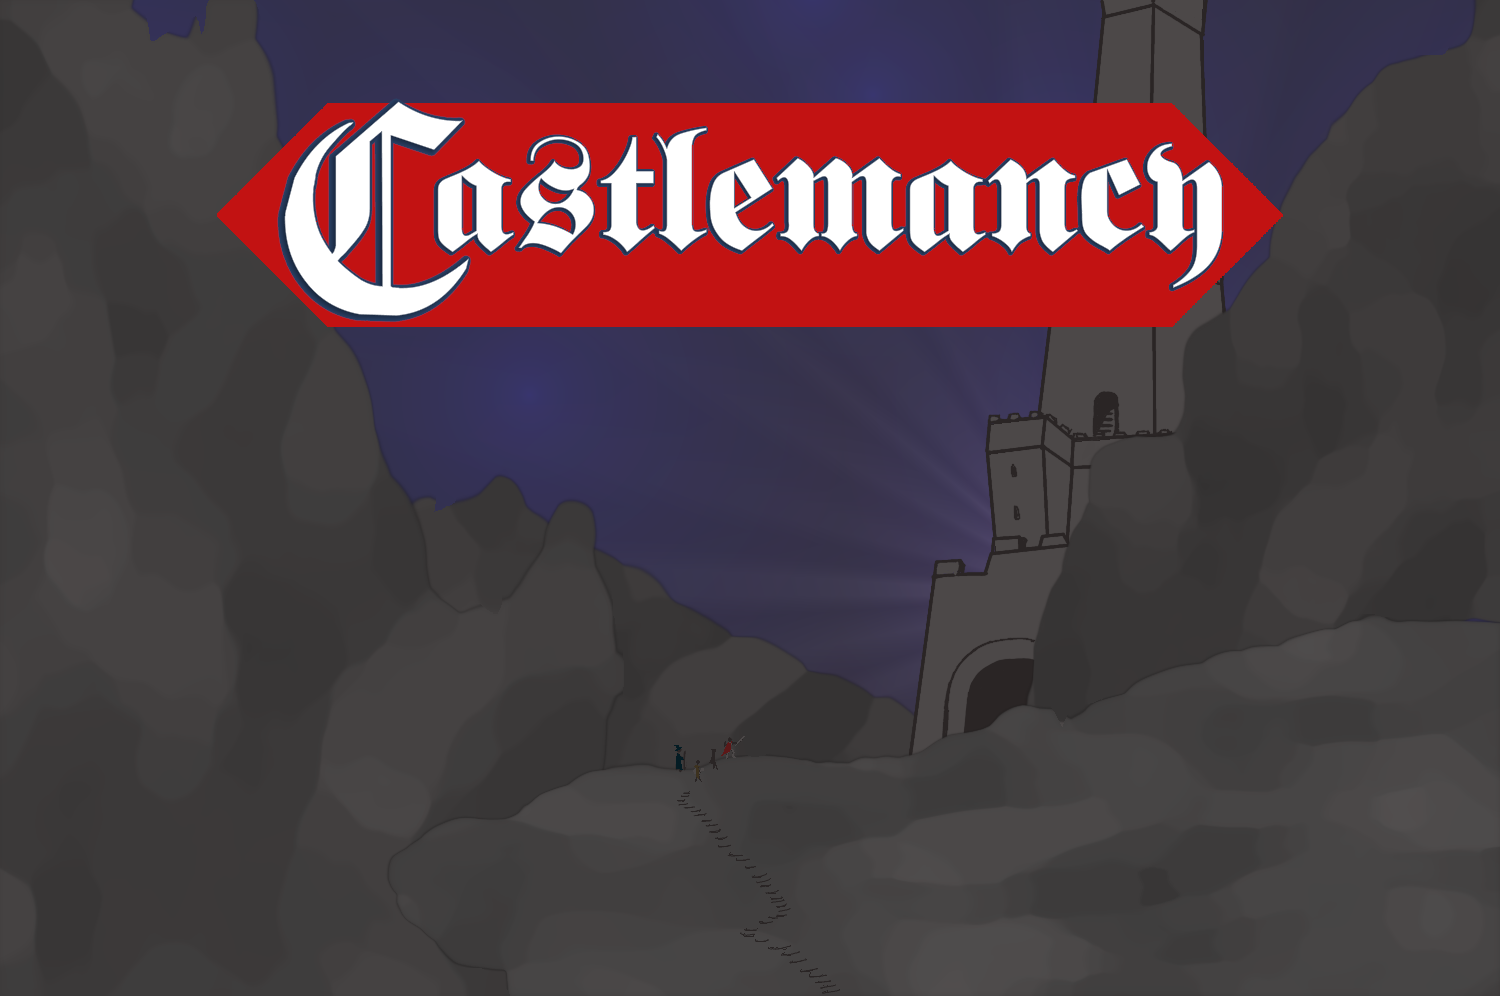 Castlemancy